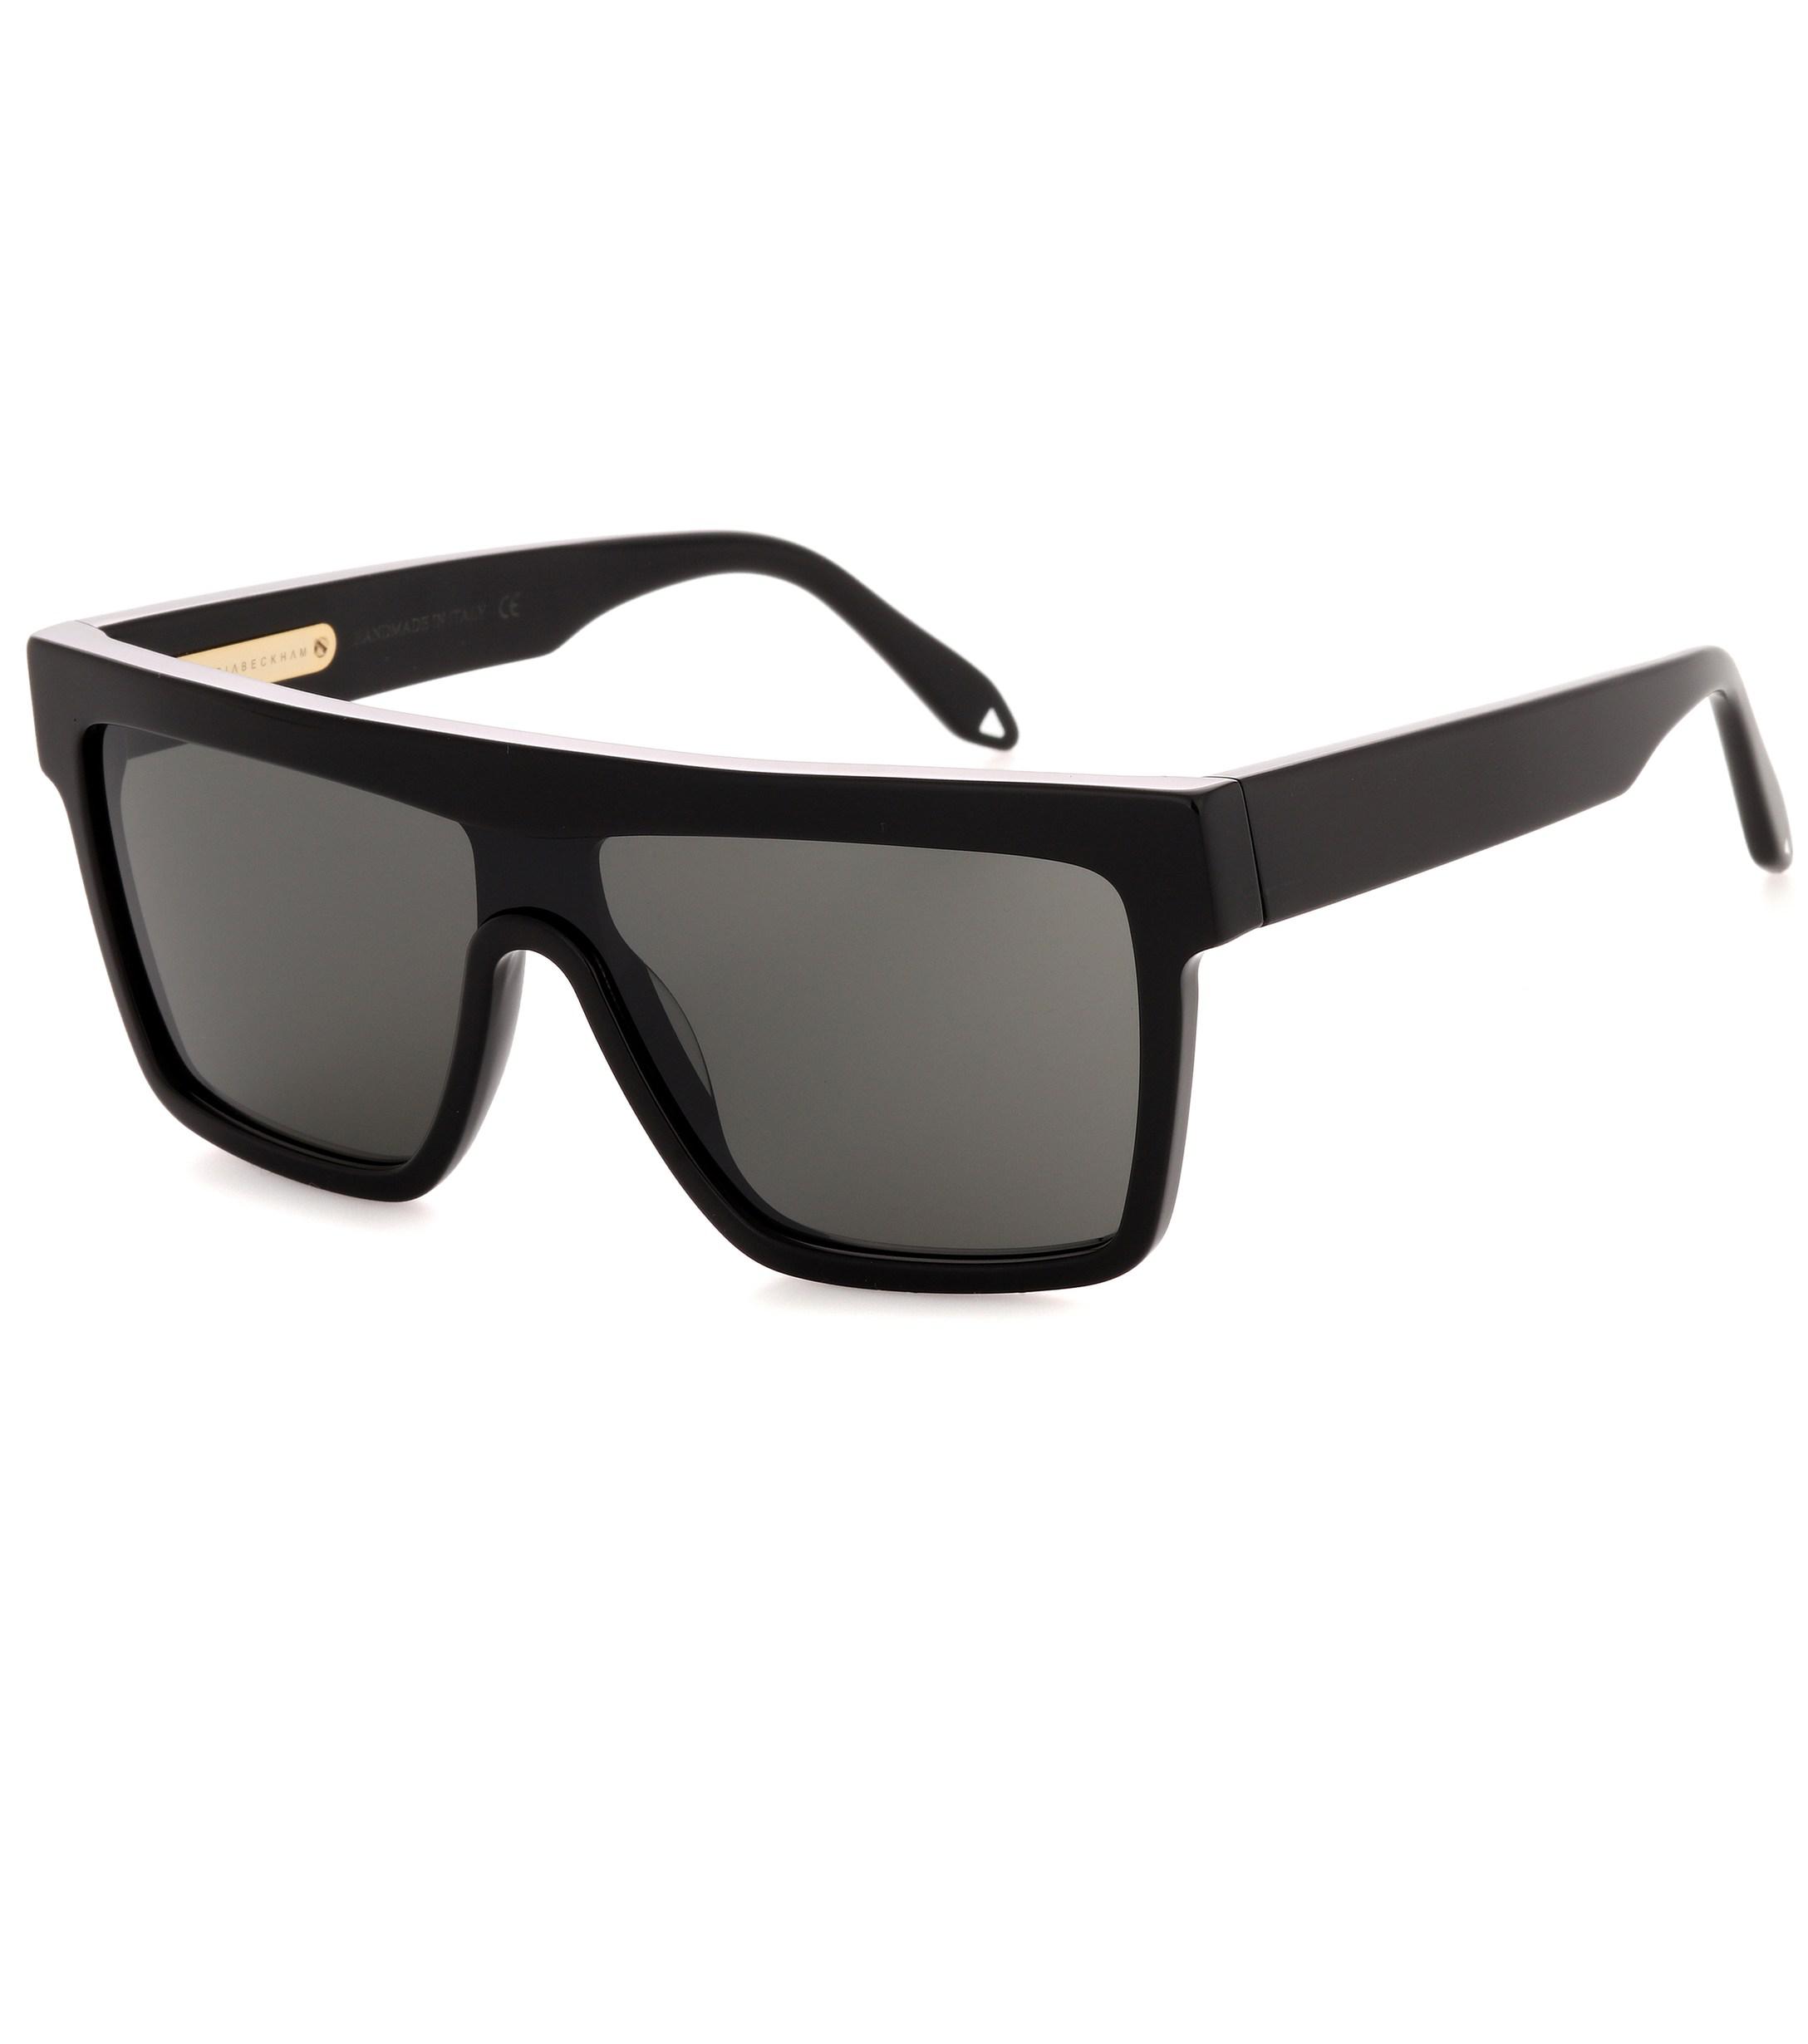 Victoria Beckham Flat Top Visor Sunglasses in Black - Lyst